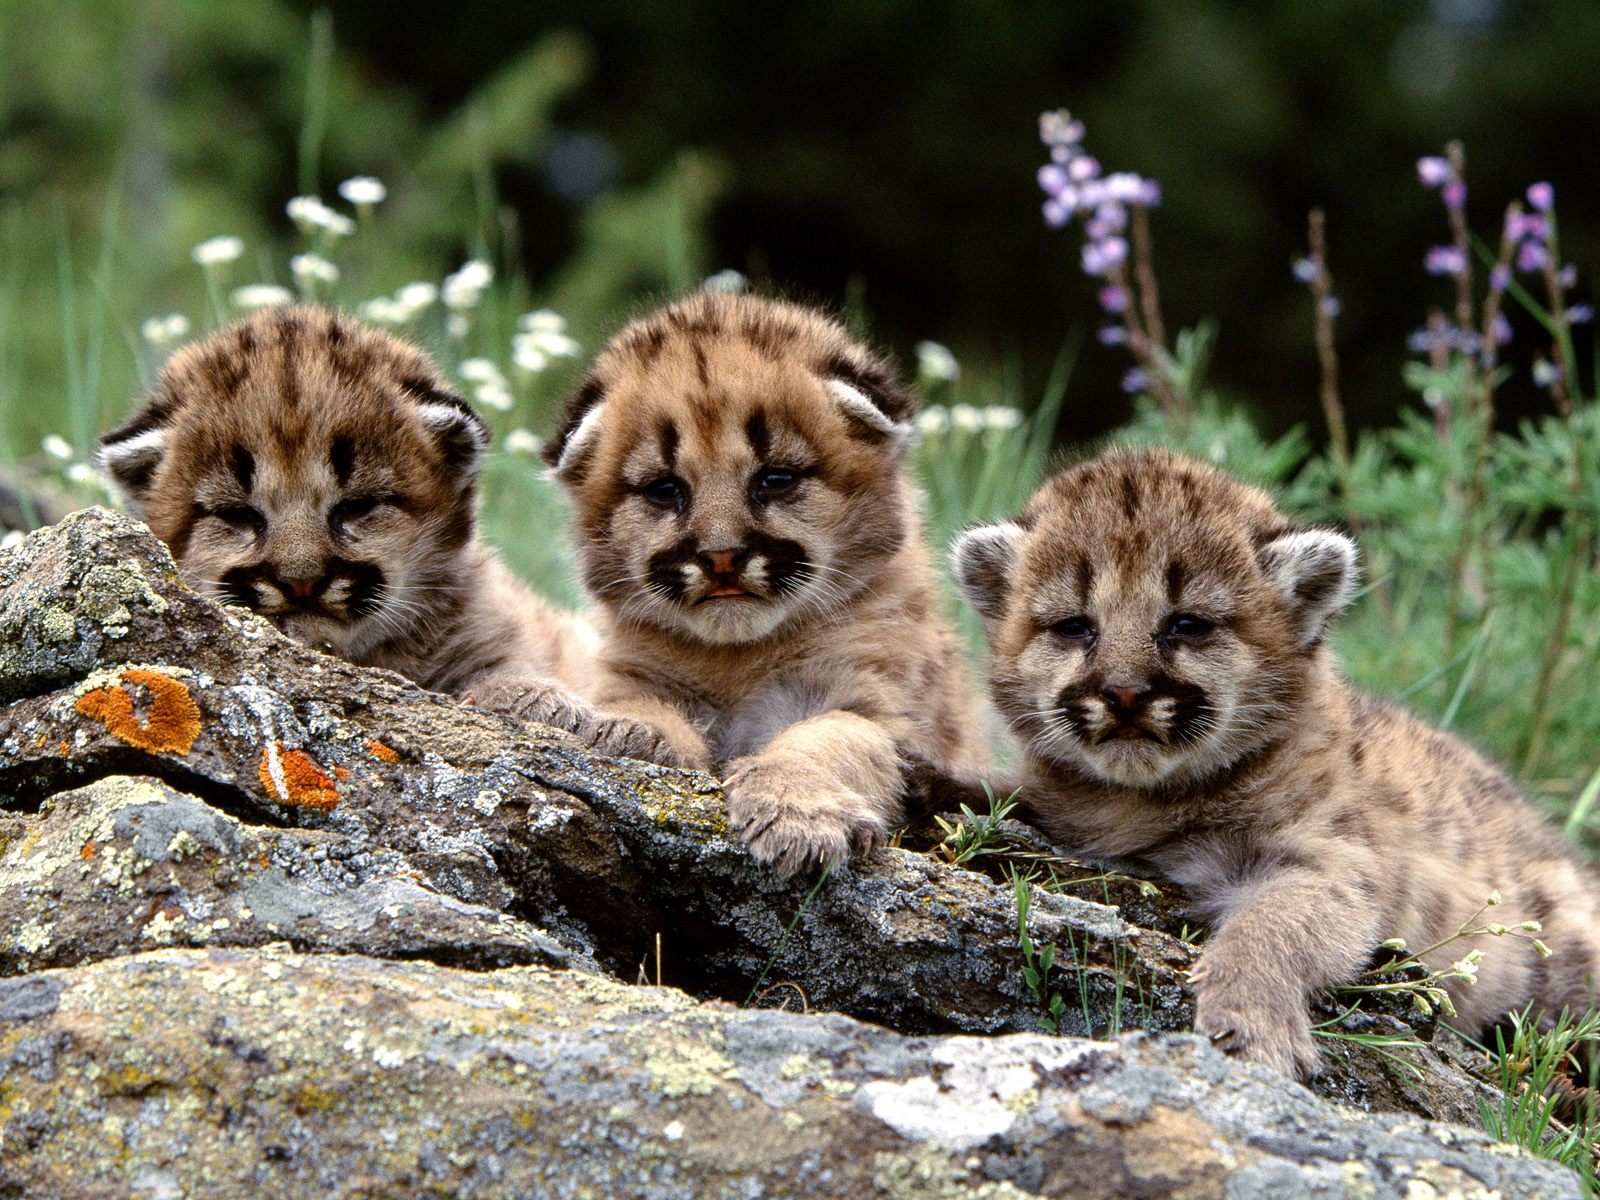 Cute-cubs-animal-cubs-28126737-1600-1200.jpg